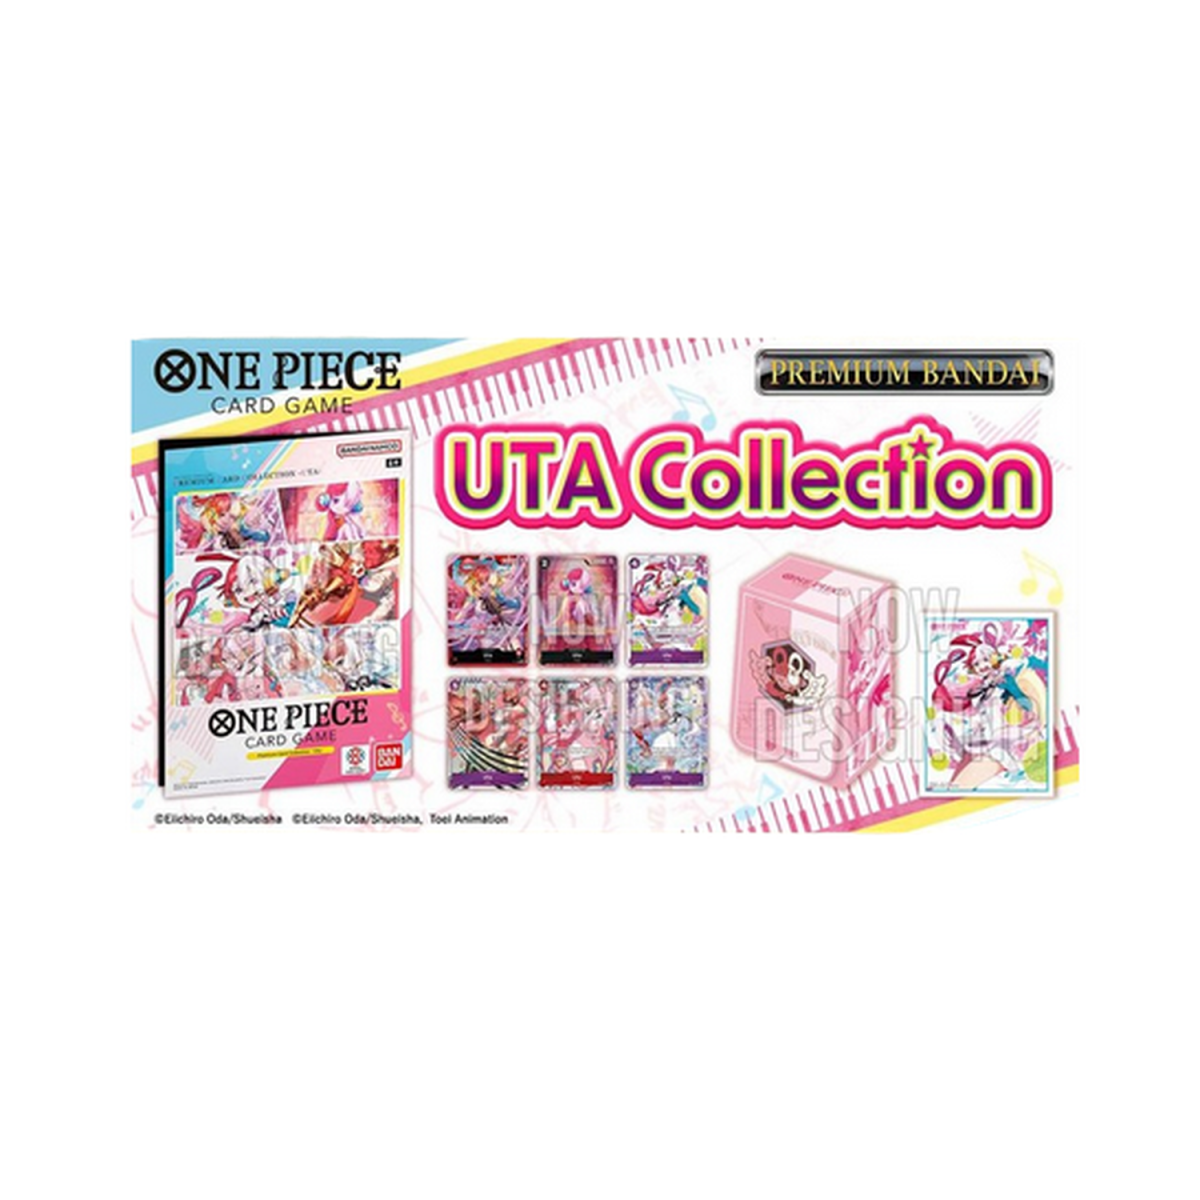 One Piece Card Game - Coffret - Uta Collection - Anglais